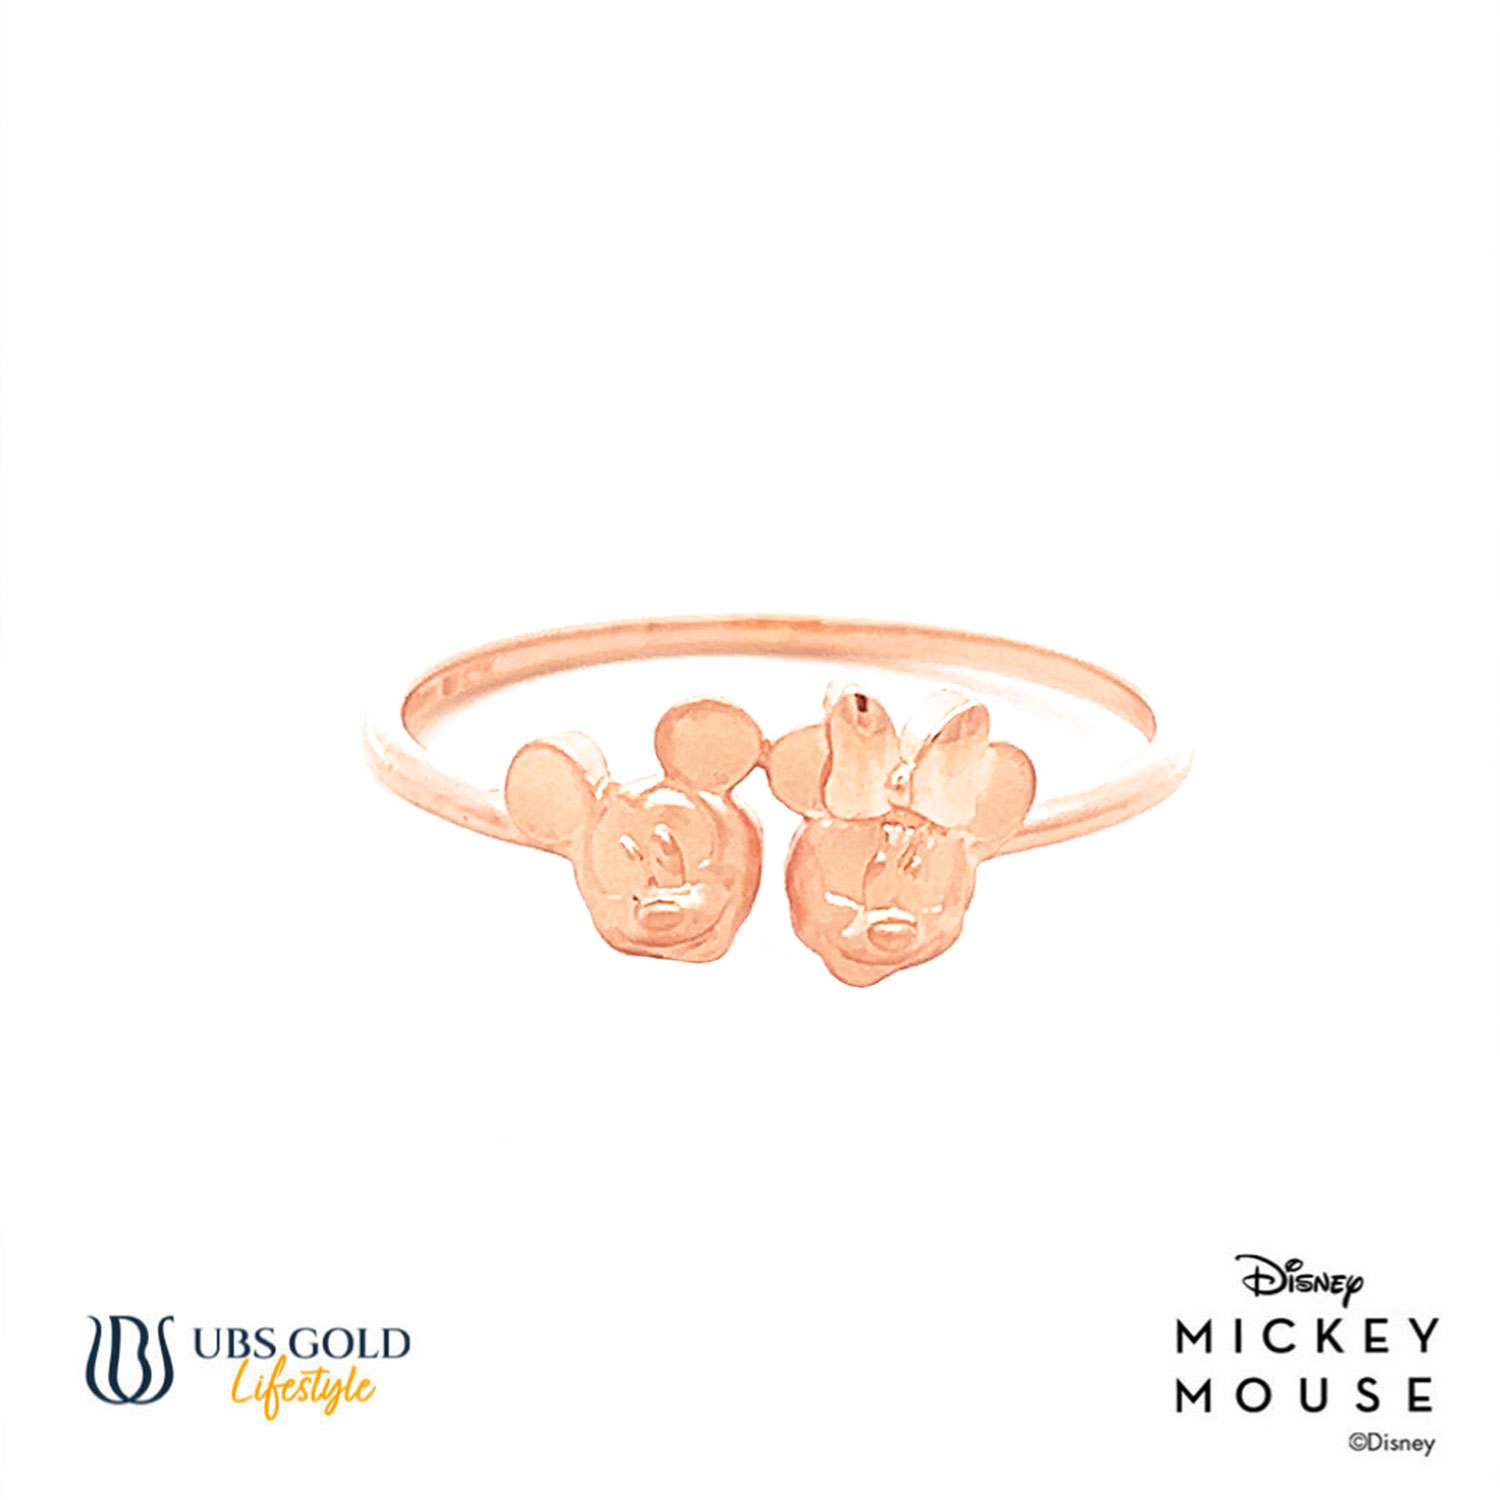 UBS Gold Cincin Emas Disney Mickey Minnie Mouse - Ccy0126 - 17K